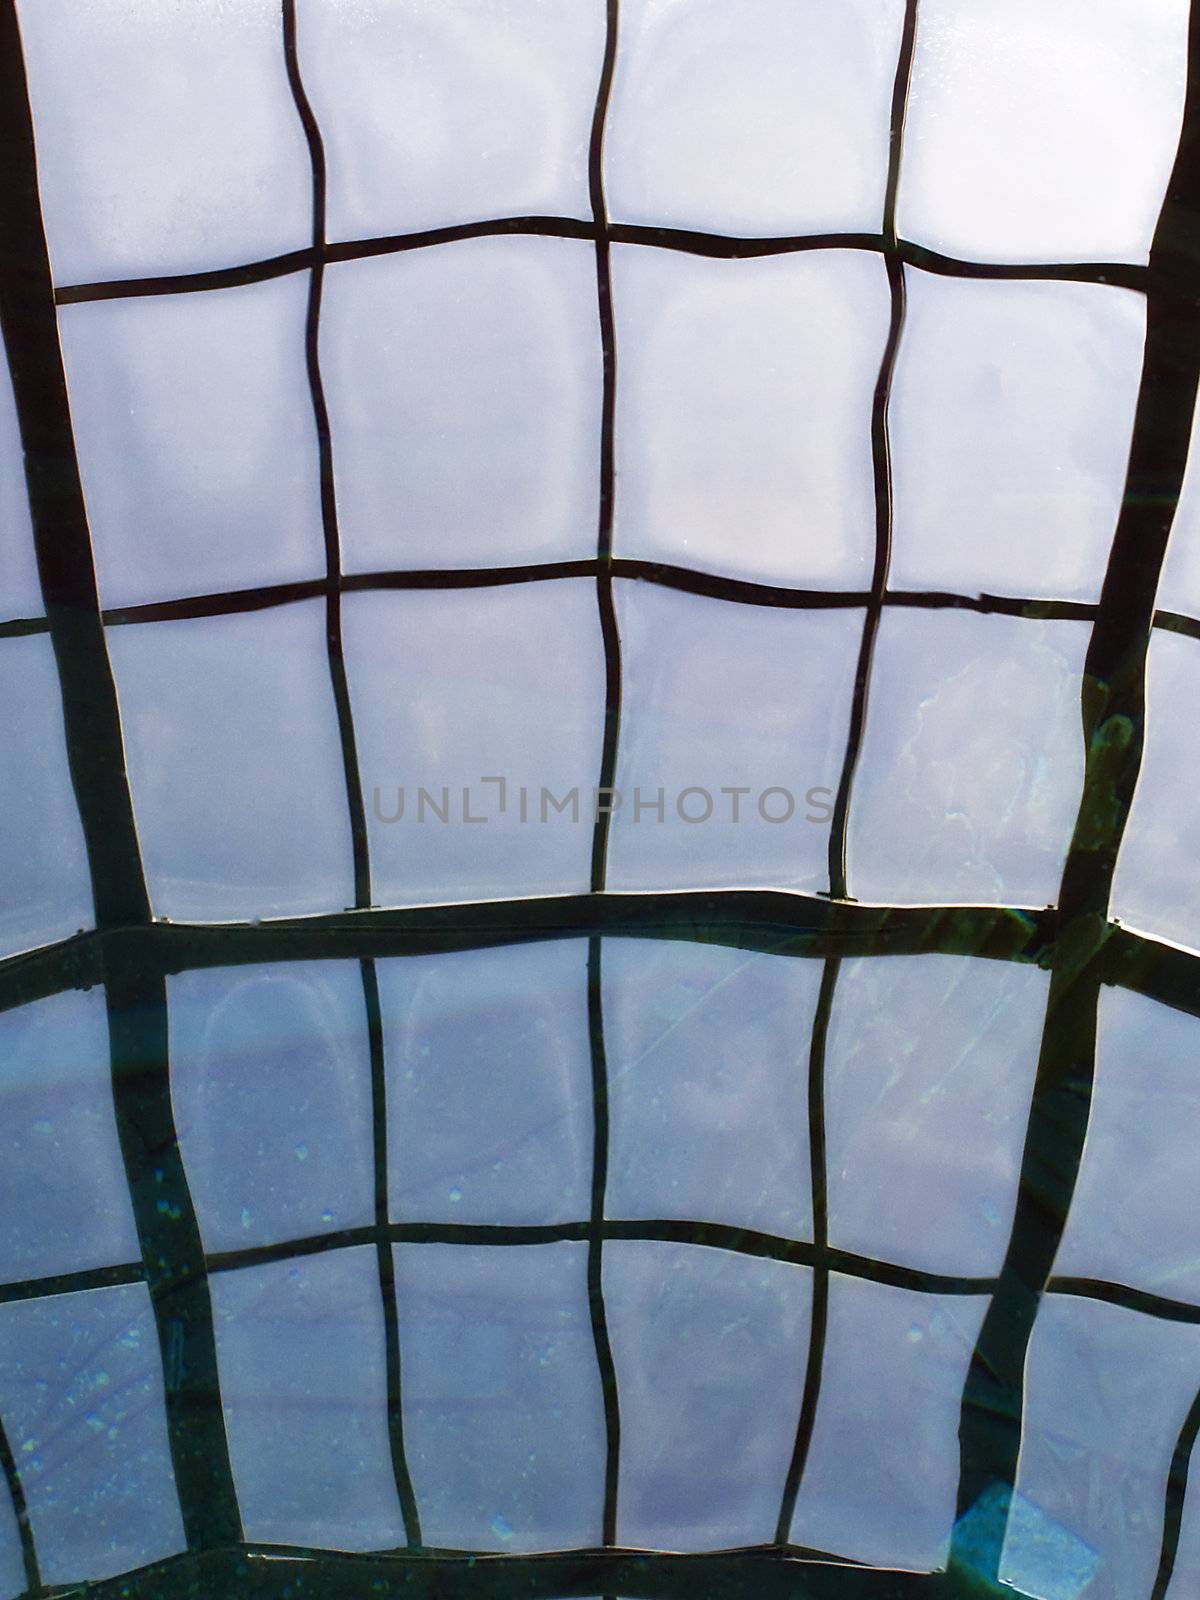 Skylight Reflection in Water by watamyr